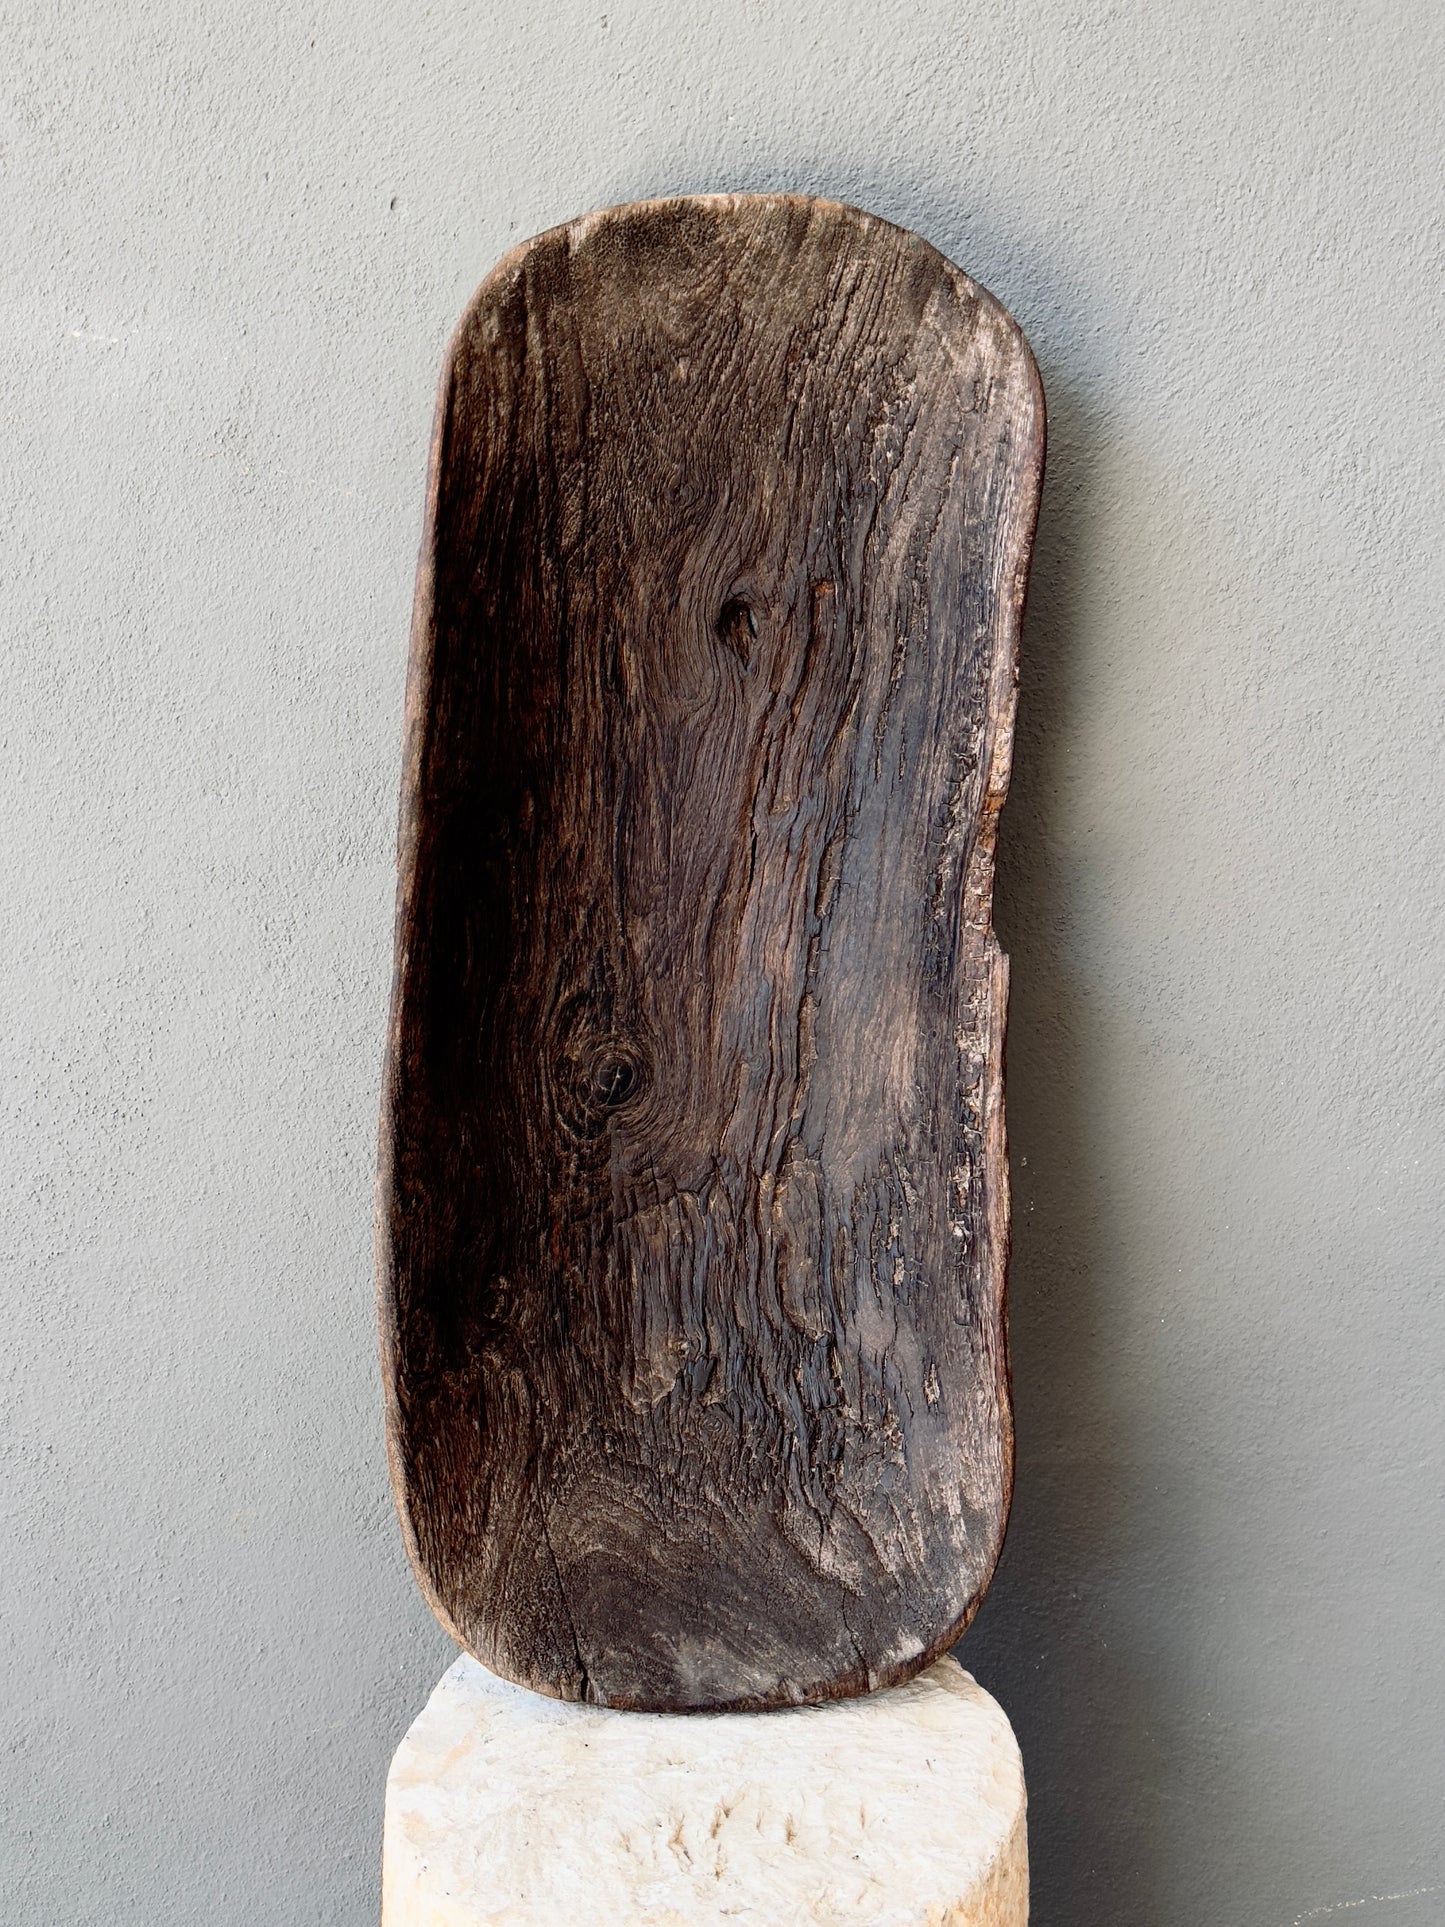 Mesquite Wood Batea From Guanajuato Early 1900’s | Batea Antigua de Mesquite